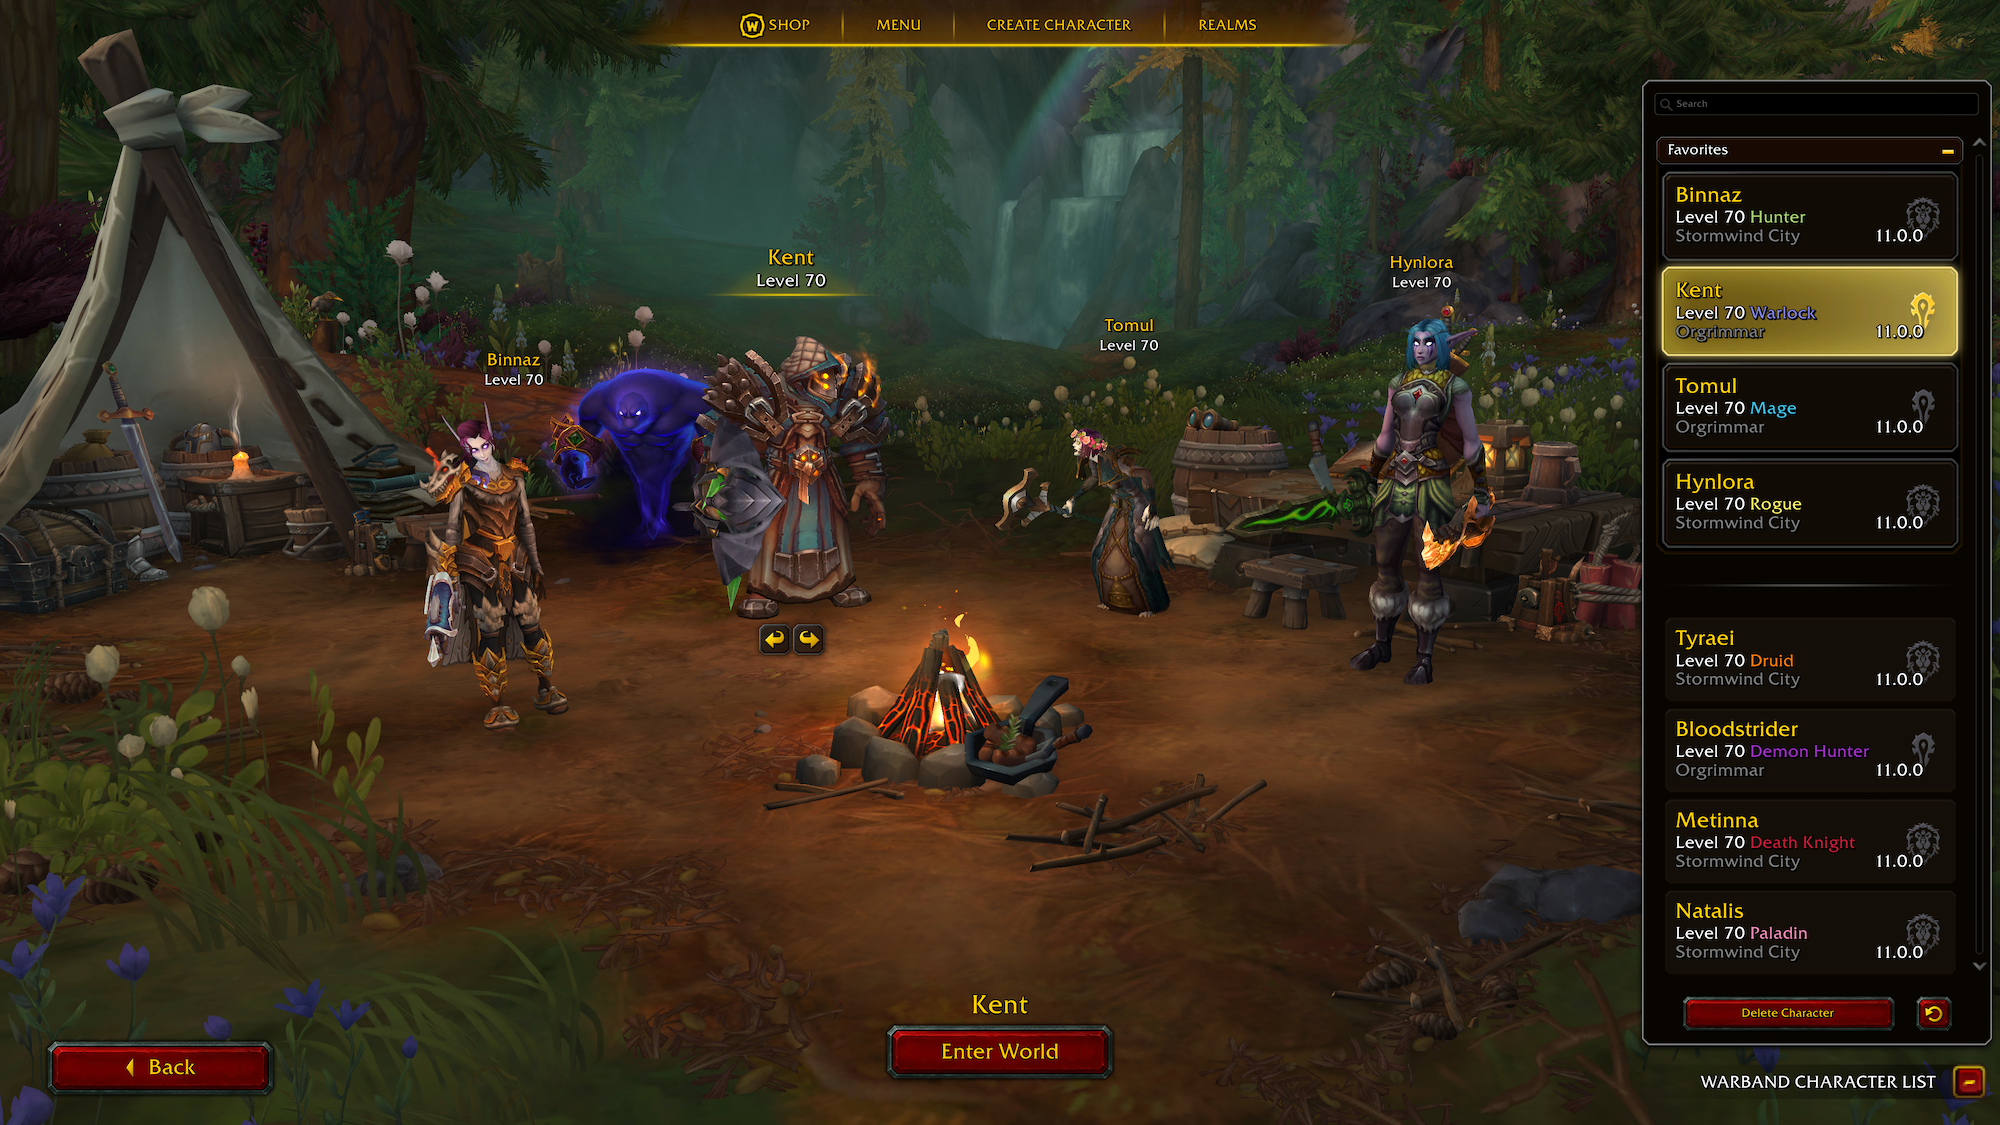 A screenshot of the new World of Warcraft character login screen